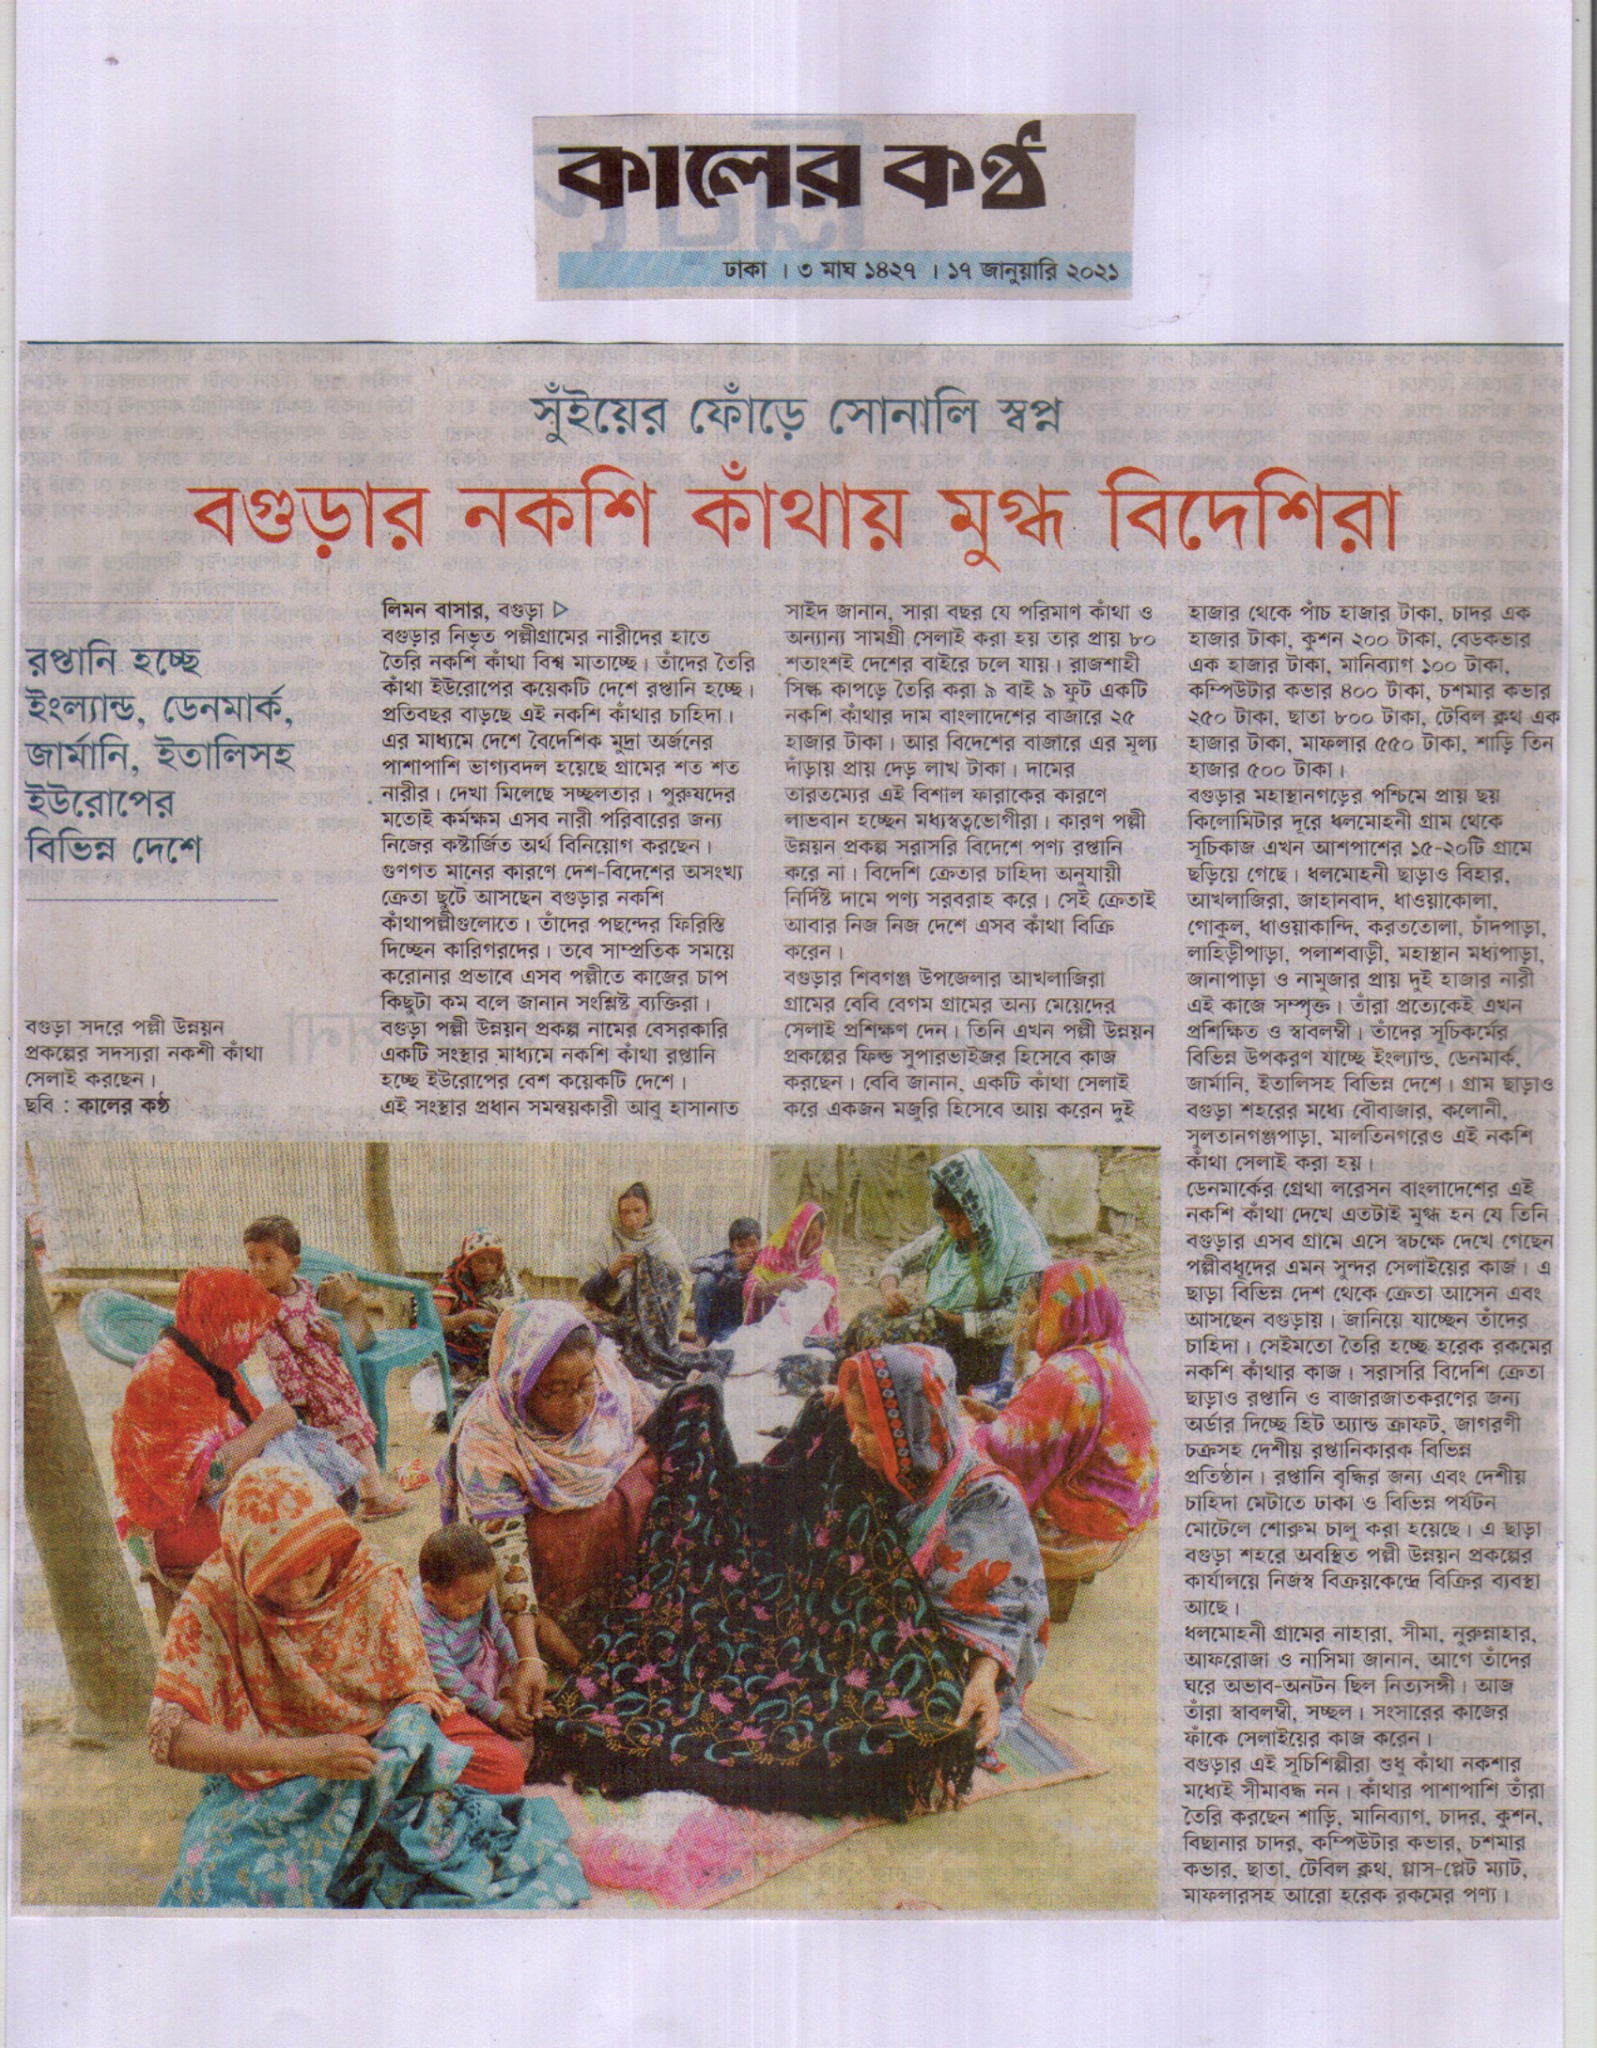 PUP Produced Nakshi Kantha Related News Published at National Newspaper